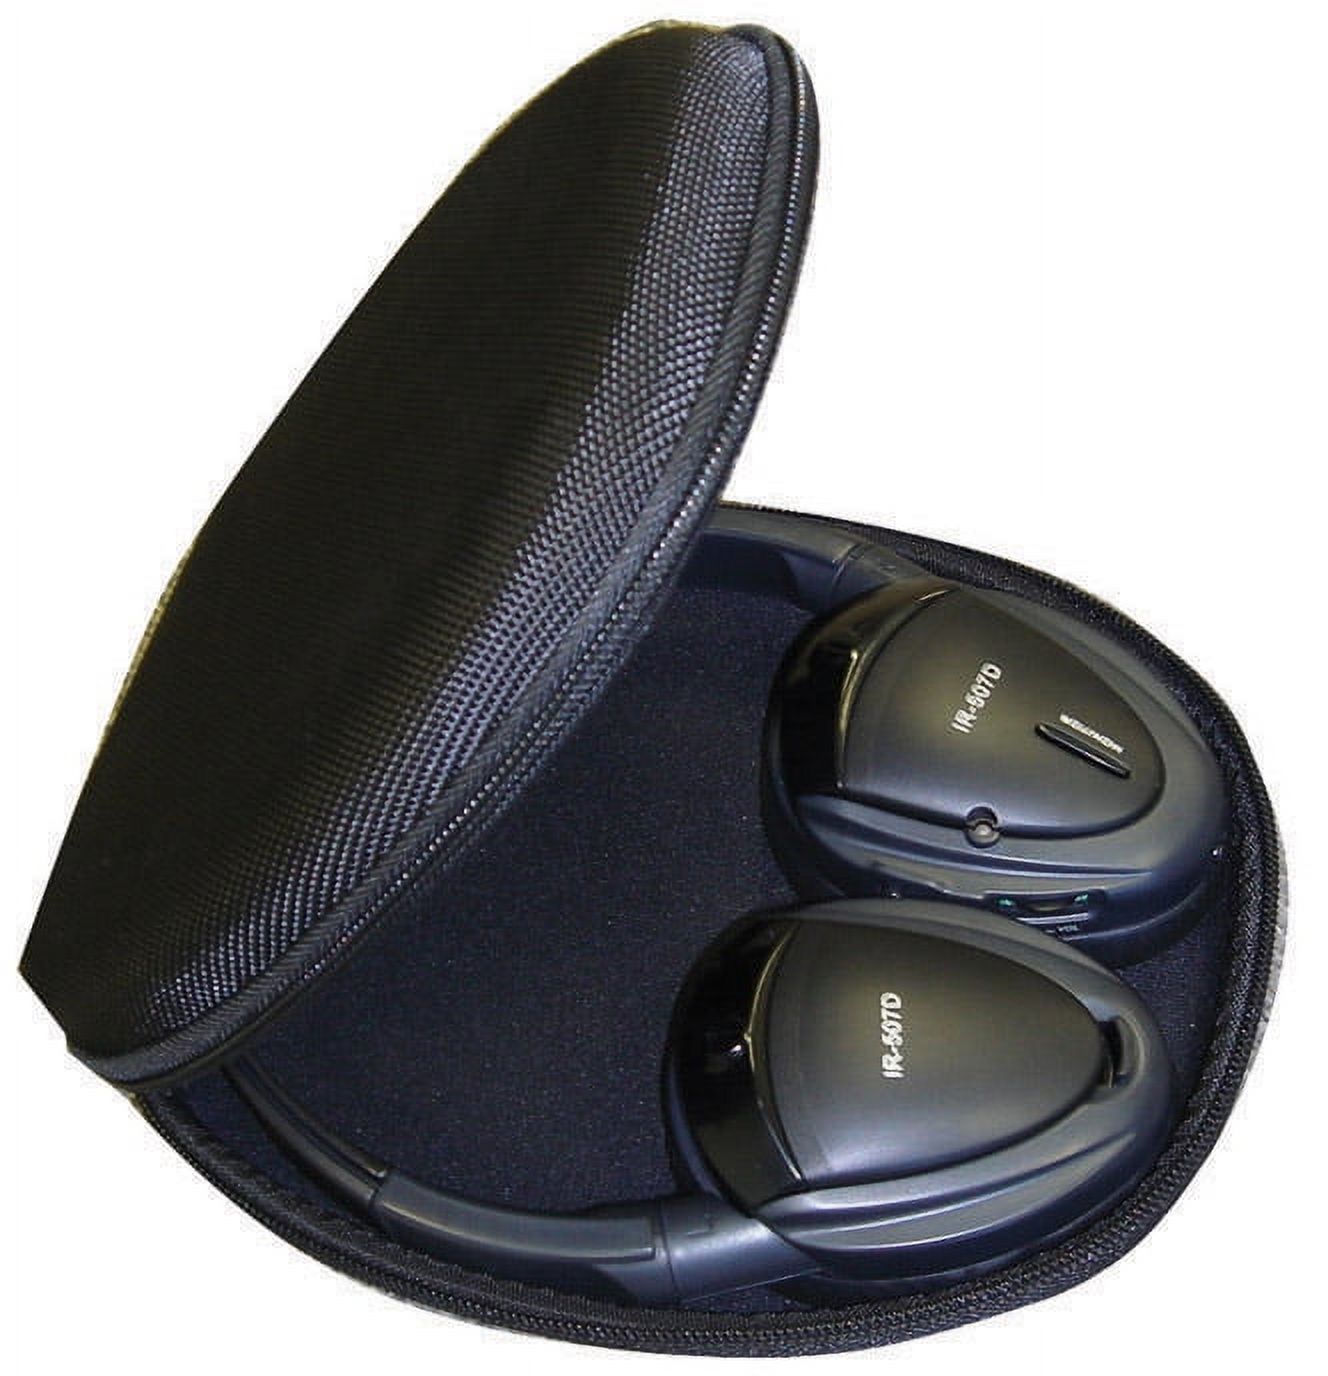 Power Acoustik Wireless Noise Cancelling Over-Ear Headphones, Black, HP-22IRT - image 3 of 3